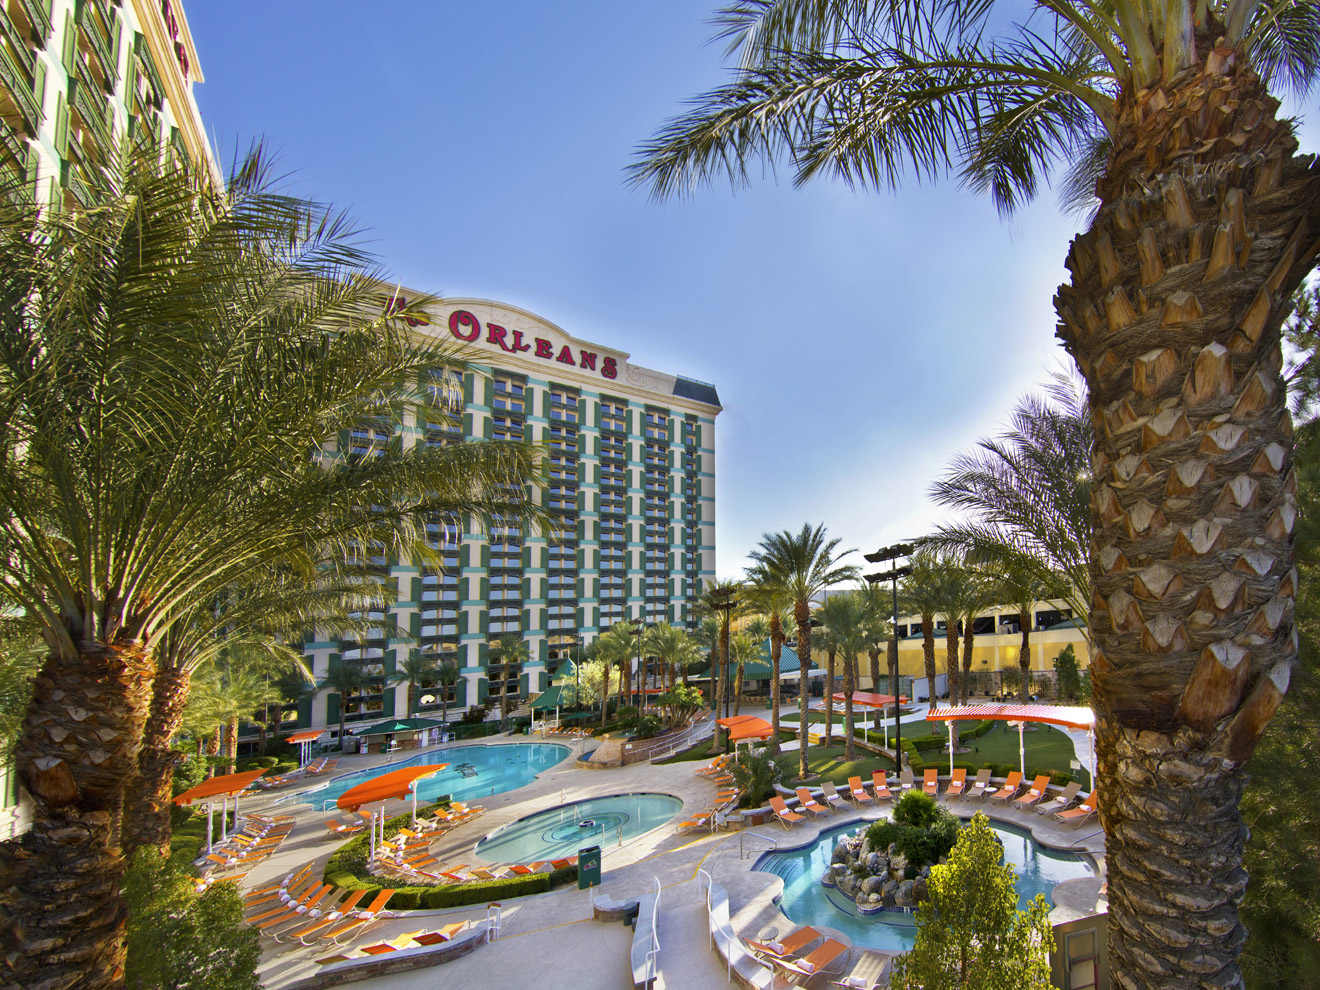 Orleans Hotel And Casino Las Vegas